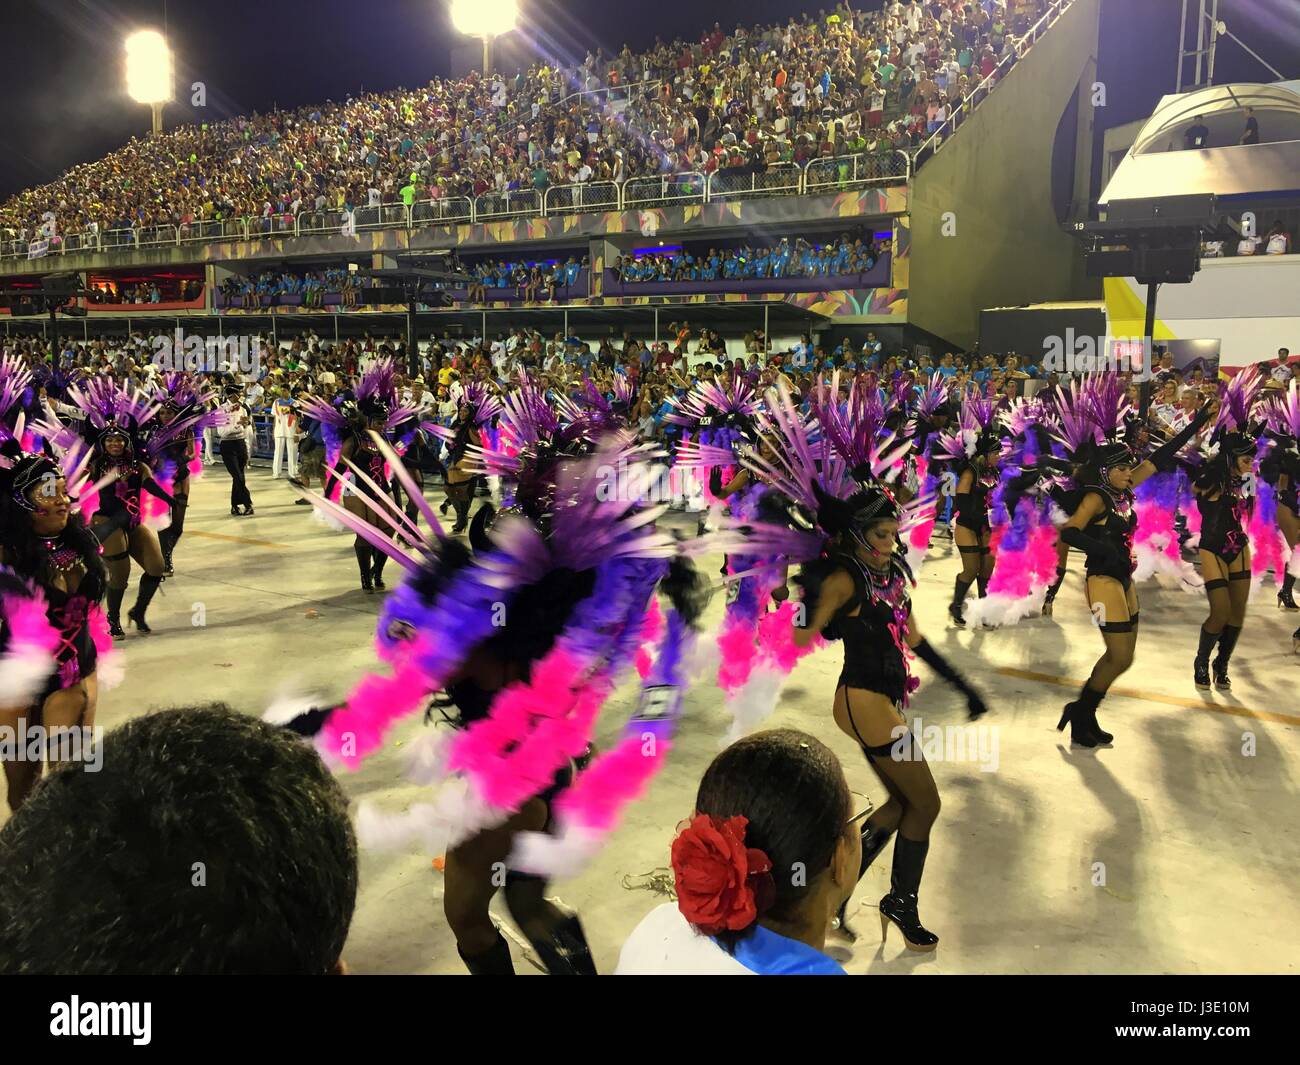 Carnaval parade in the Sambodromo, Rio de Janeiro, Brazil. What an energy, spirit, culture, and crazy party. Stock Photo